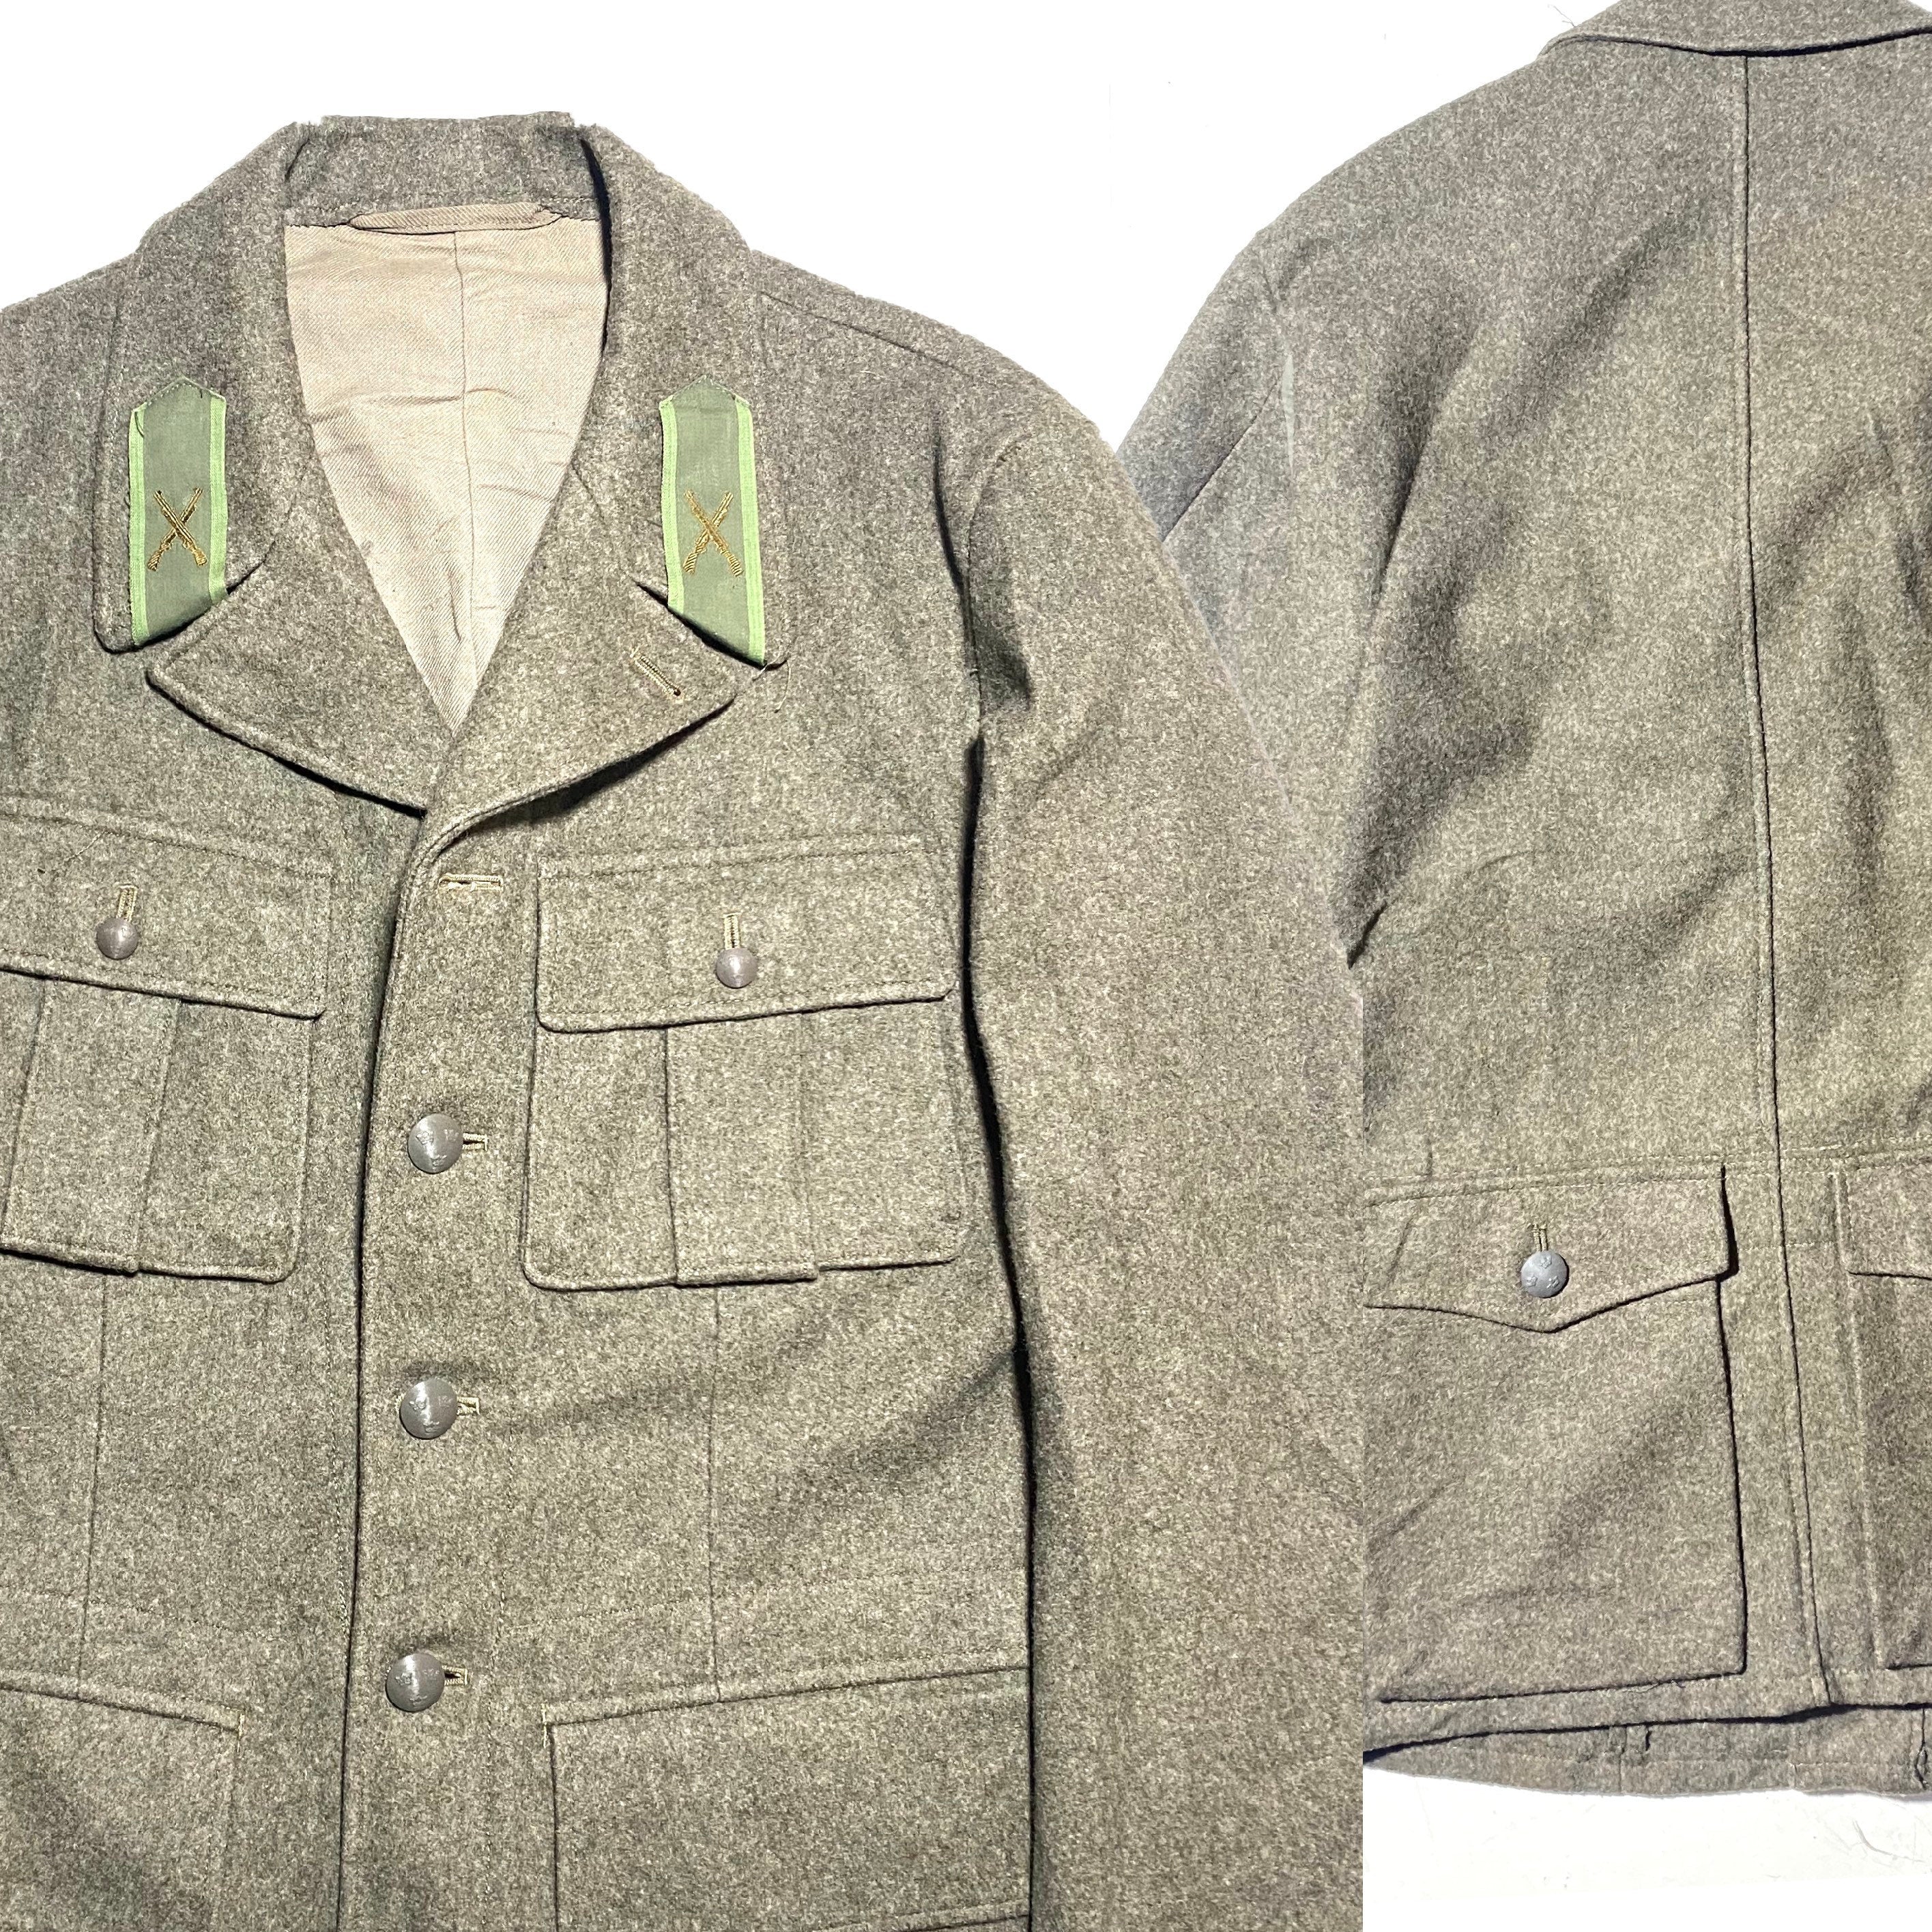 Swedish army 1952 military greyish Green wool field jacket with